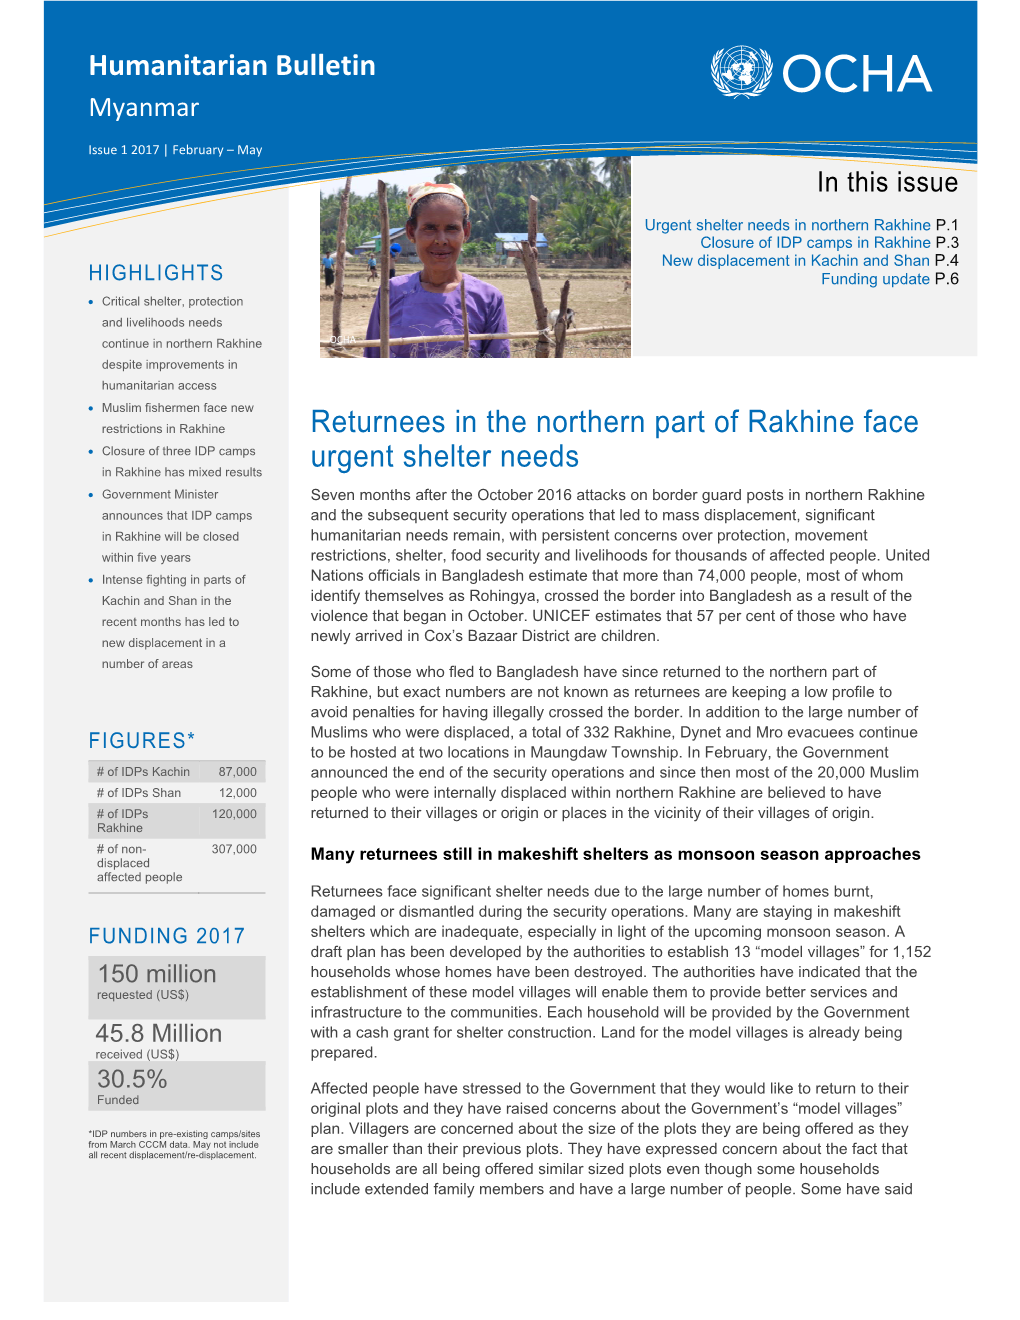 Returnees in the Northern Part of Rakhine Face Urgent Shelter Needs Humanitarian Bulletin